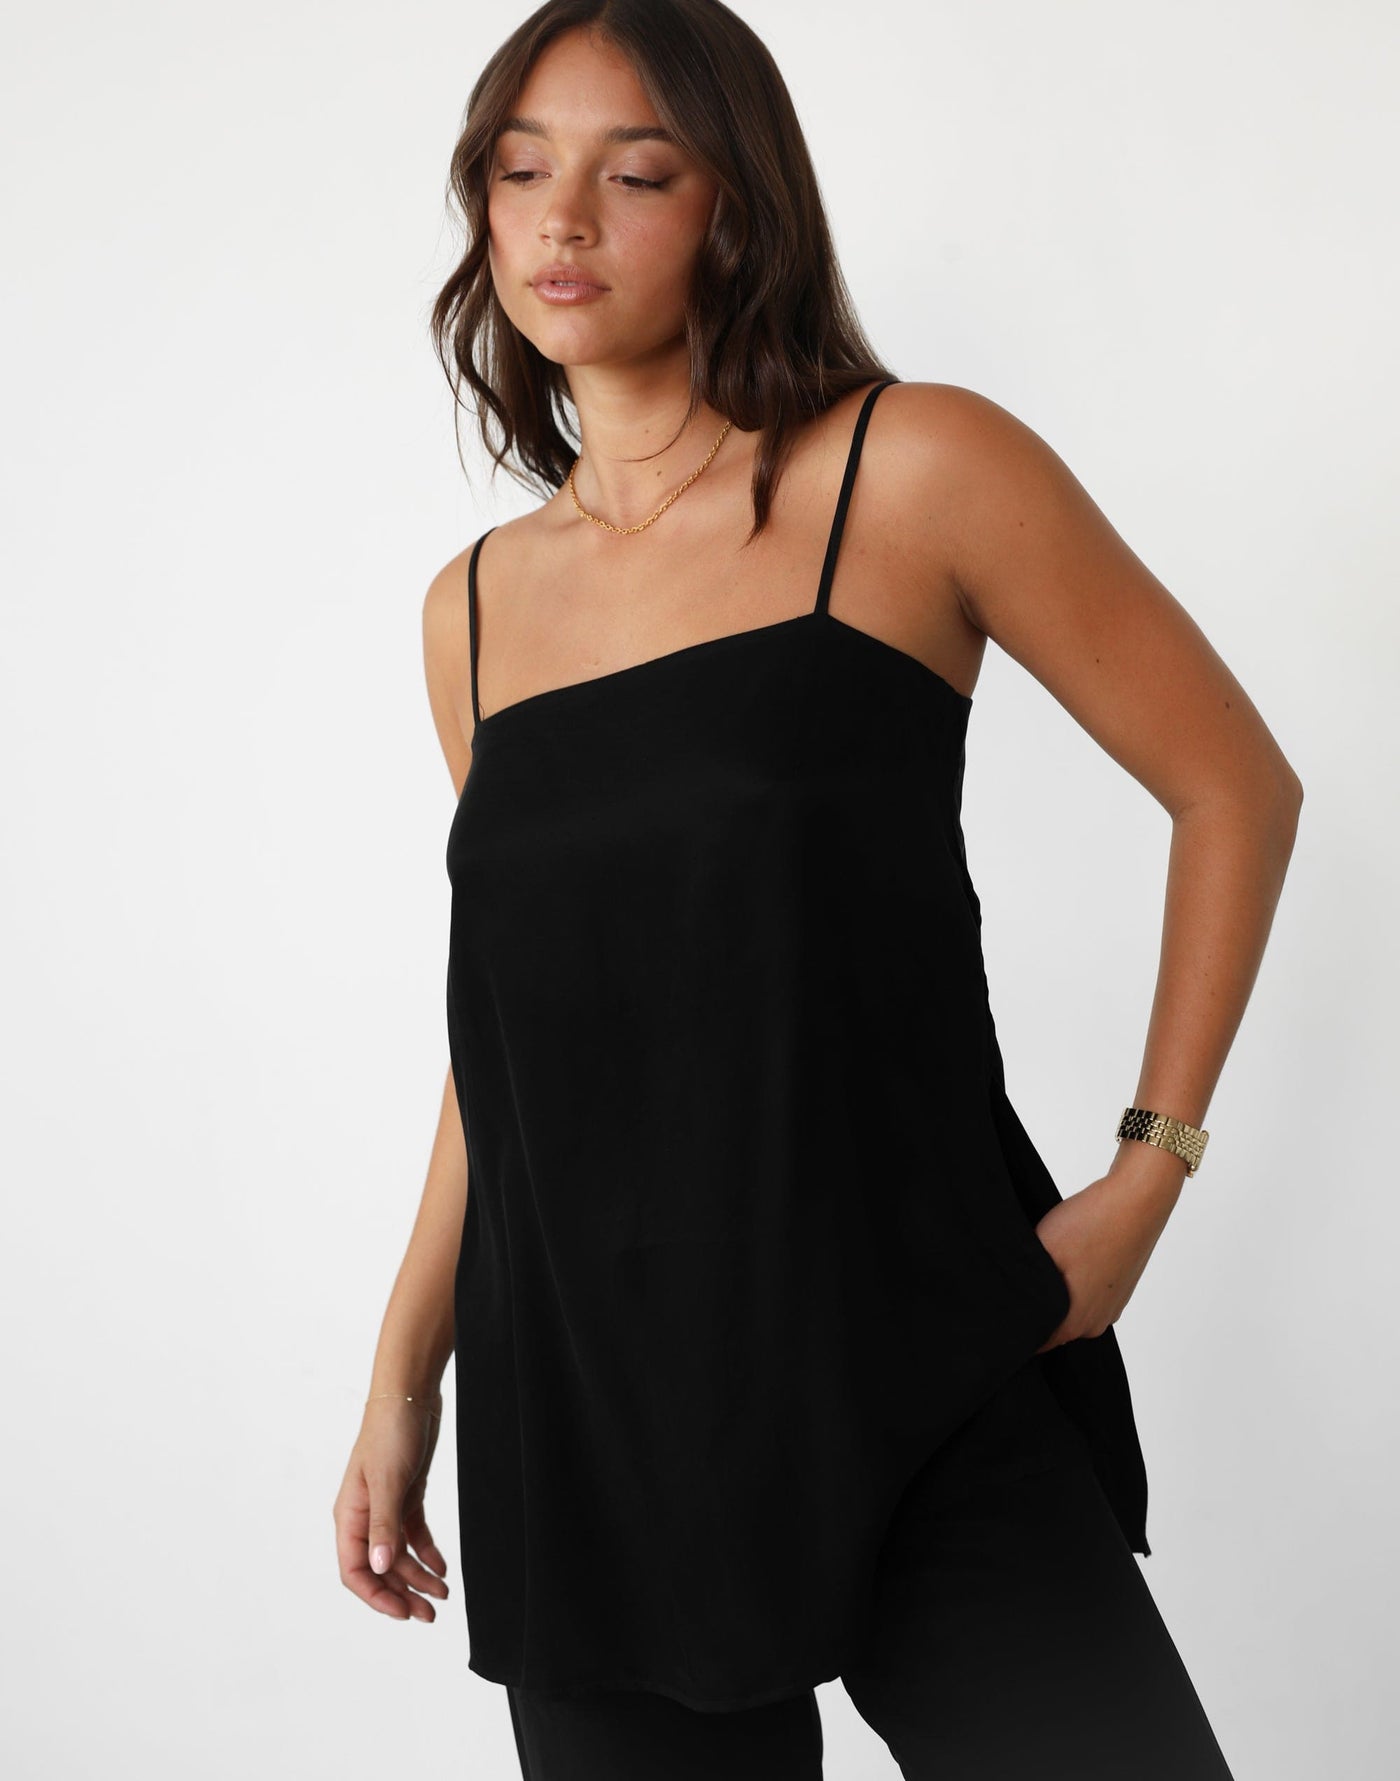 Elska Cami Top (Black) | Split Sides Cami Top - Women's Top - Charcoal Clothing